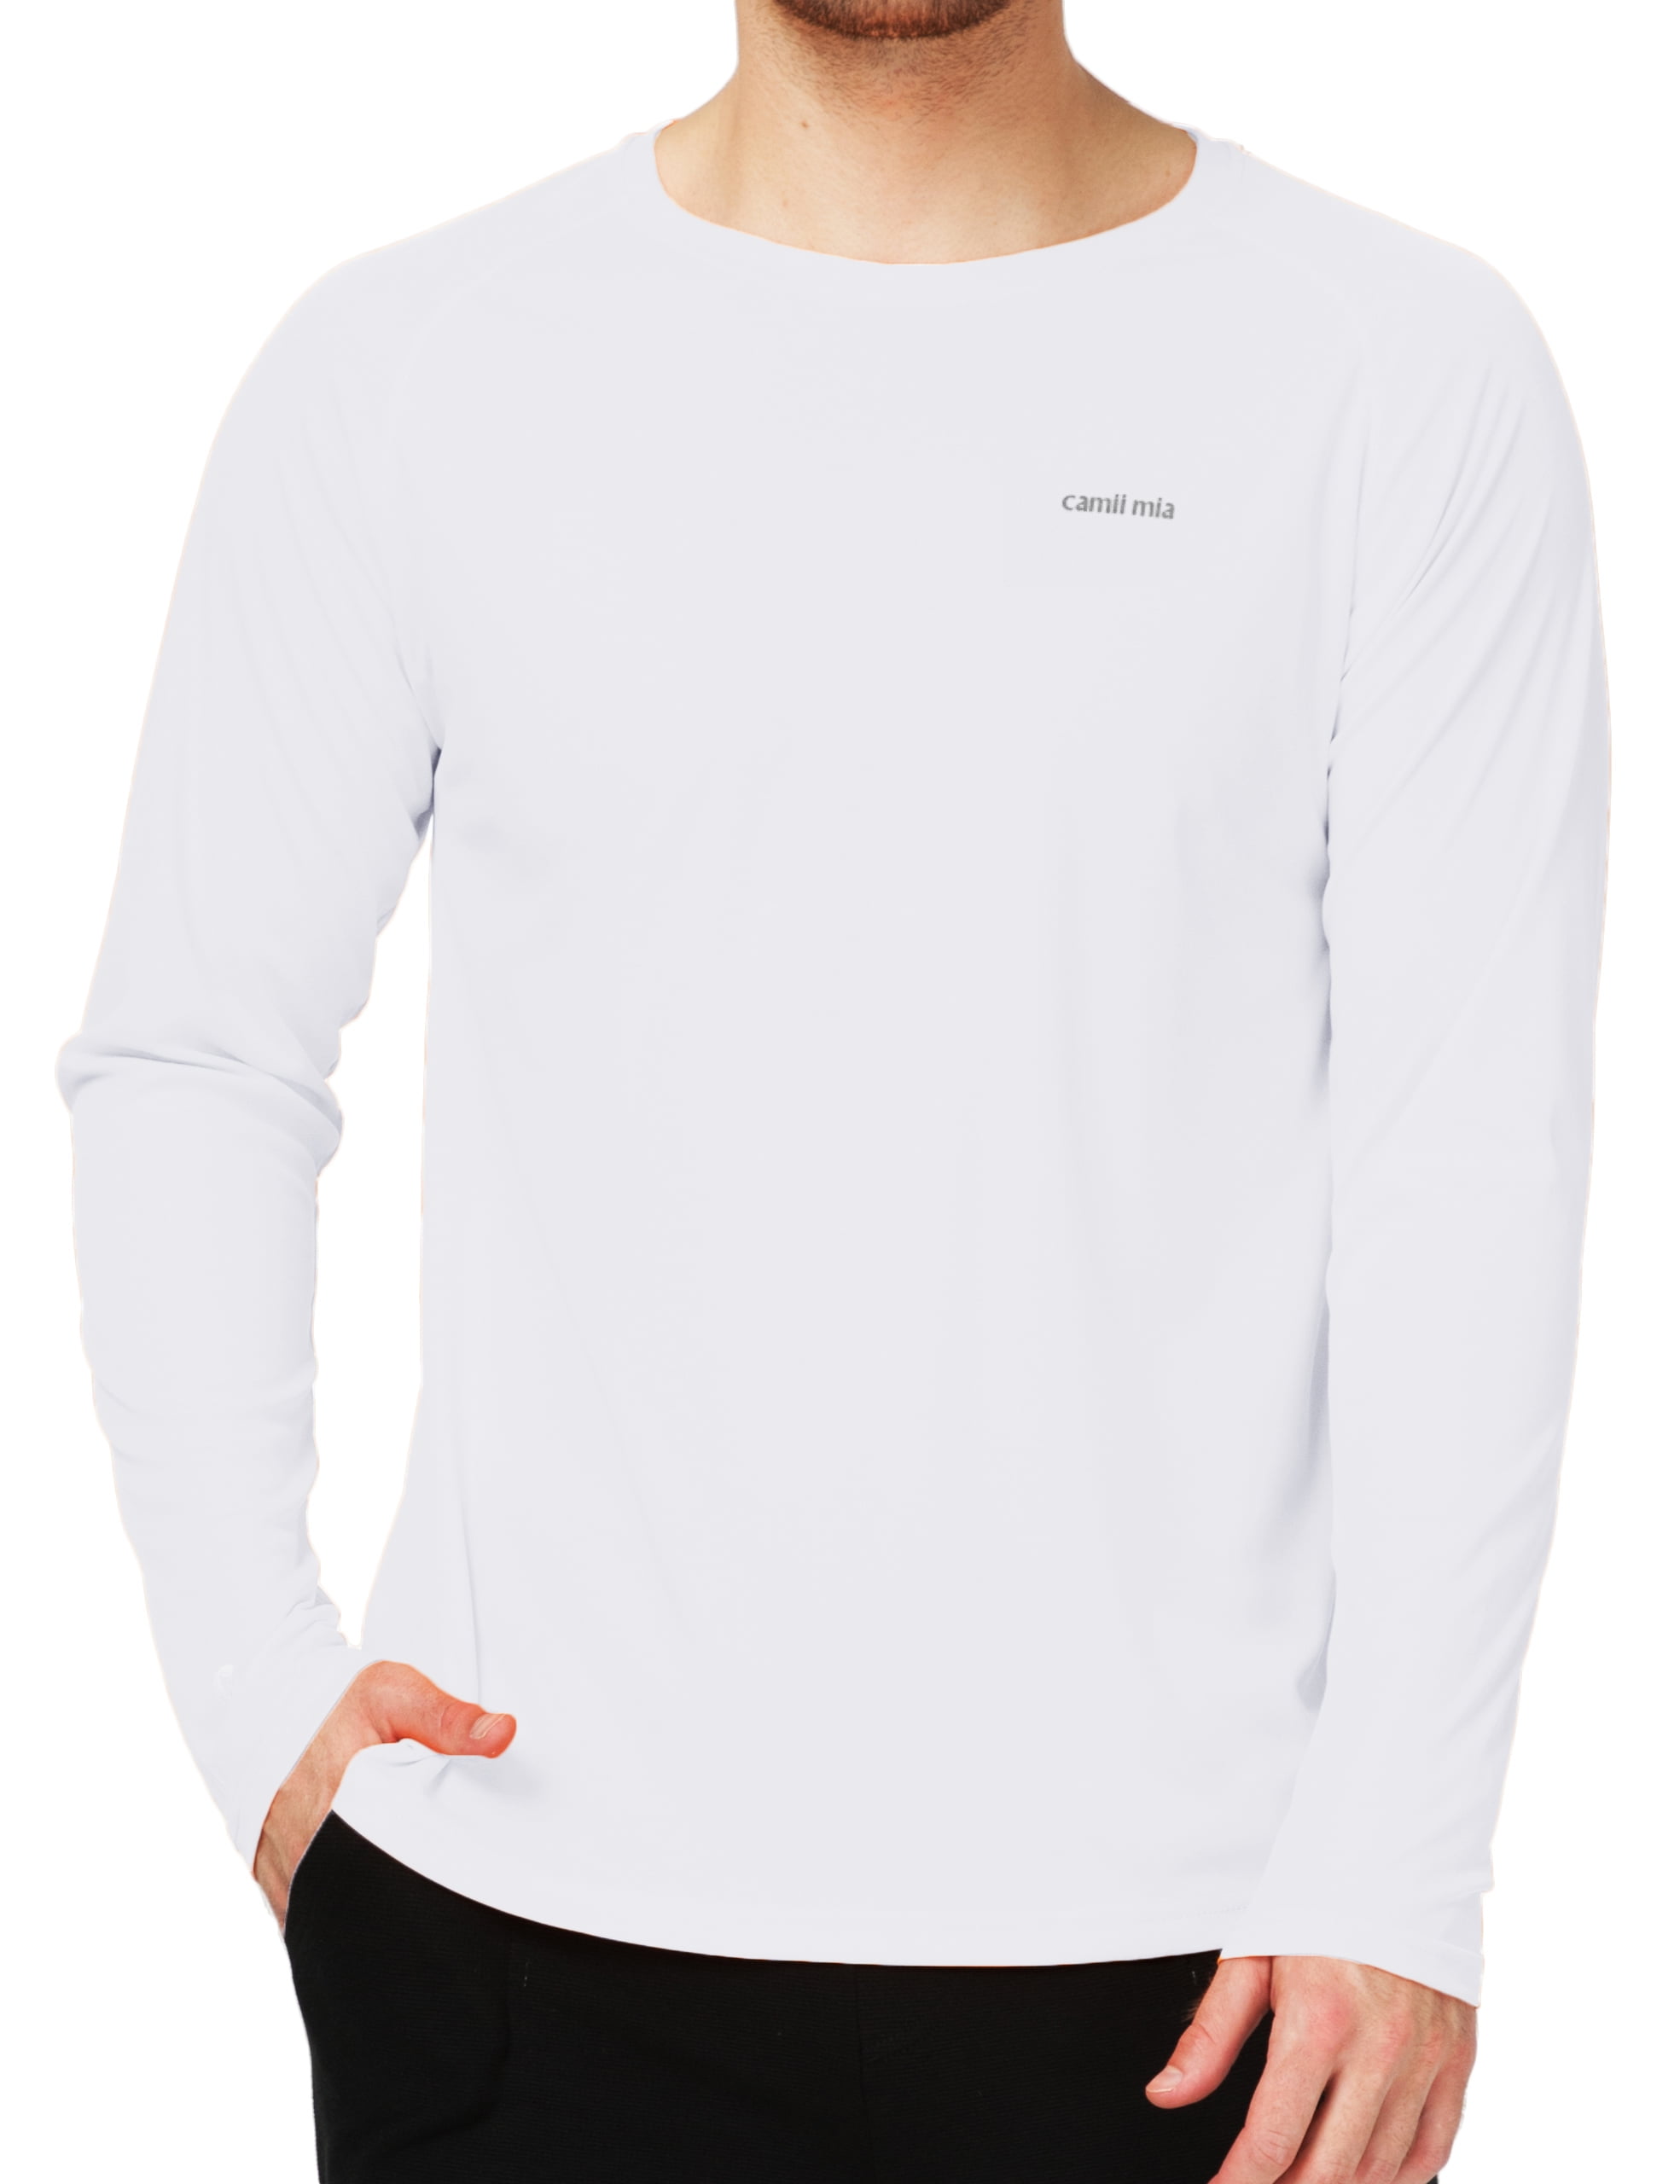 Fishing Shirts for Men Long Sleeve Shirts Sun Protection Shirts, Athletic  Shirts for Men, Men UPF 50+ SPF Shirts for Running Hiking 